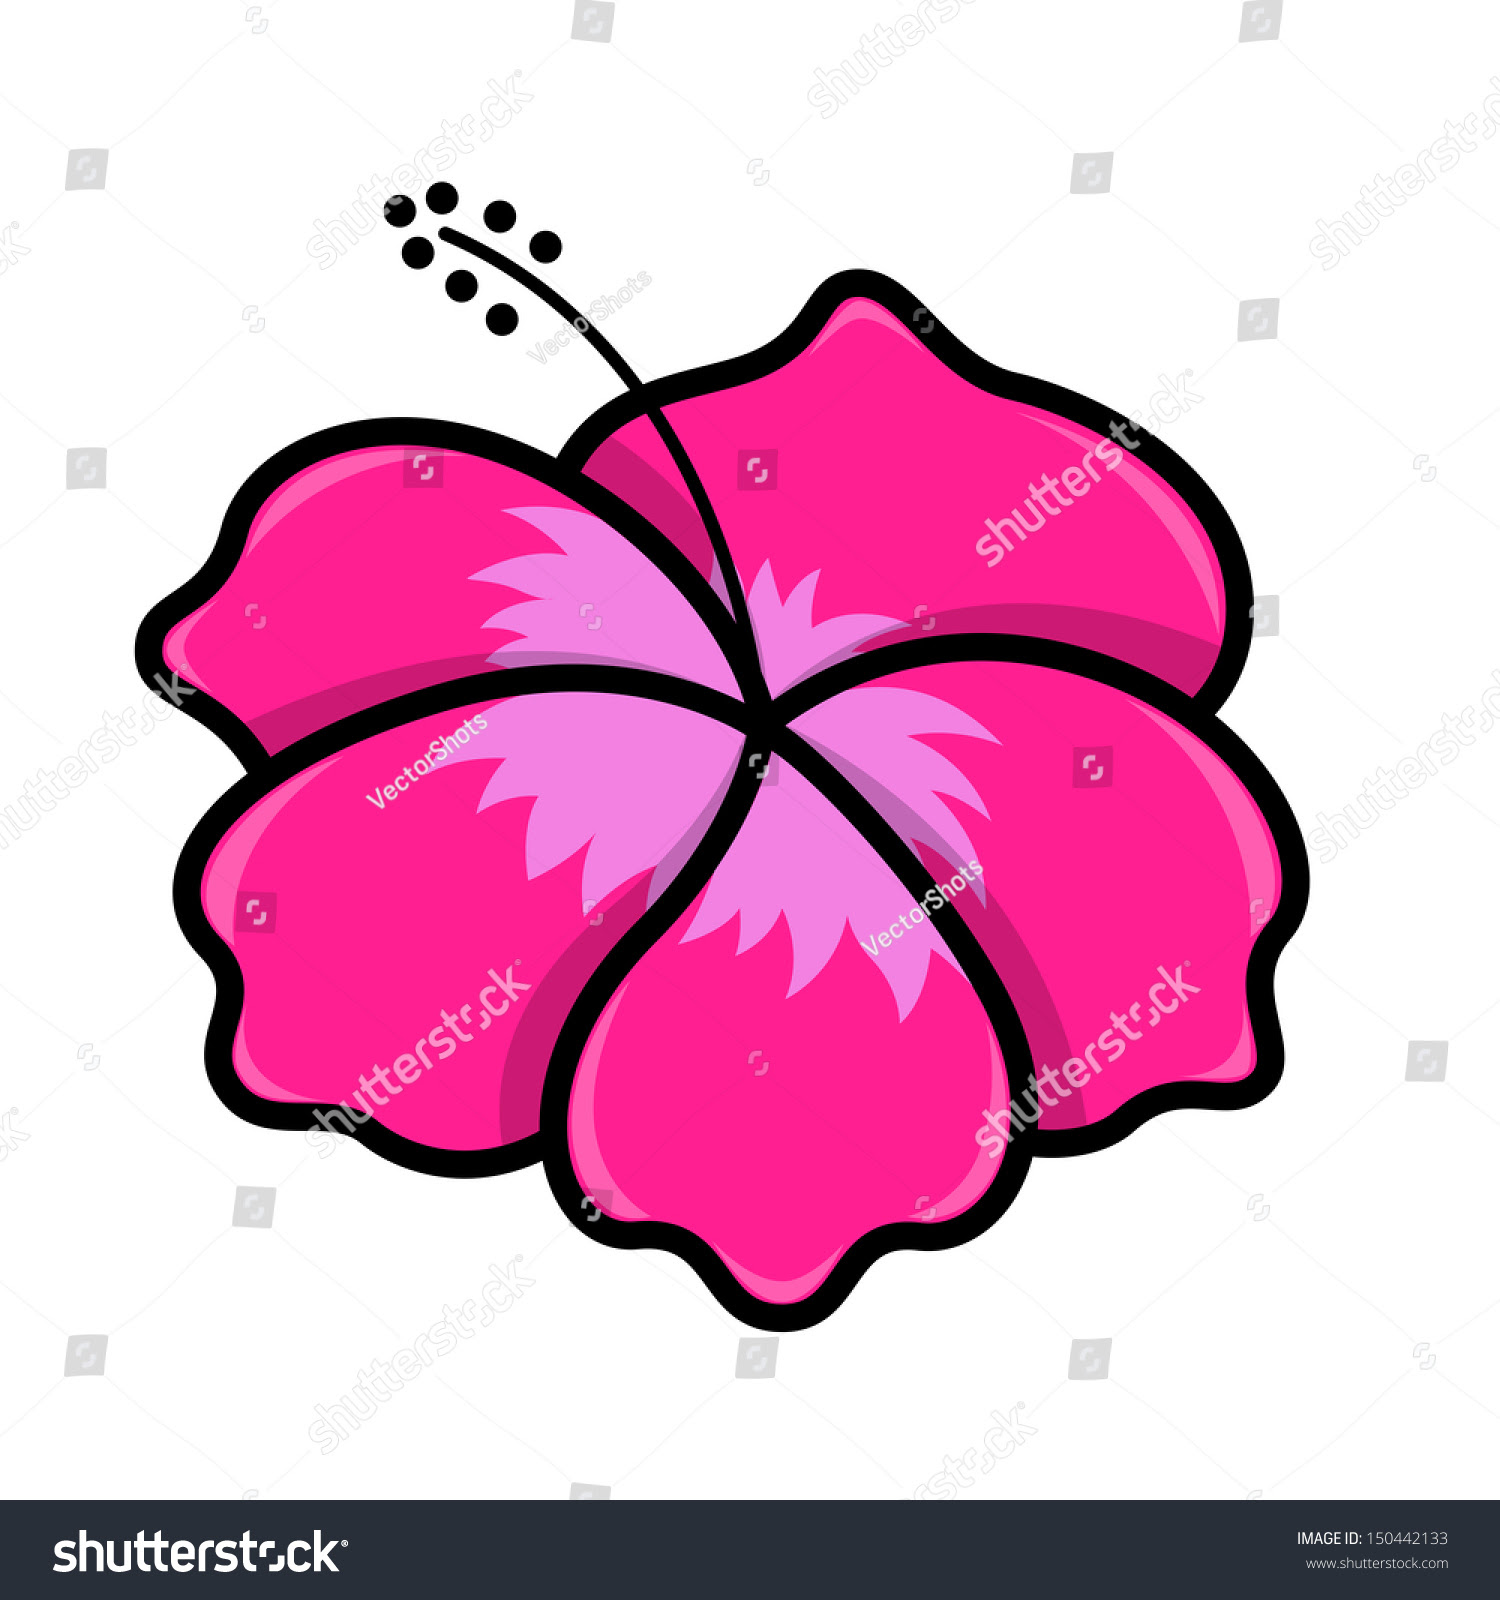 Lukisan Gambar Bunga Raya Hitam Putih | Cikimm.com